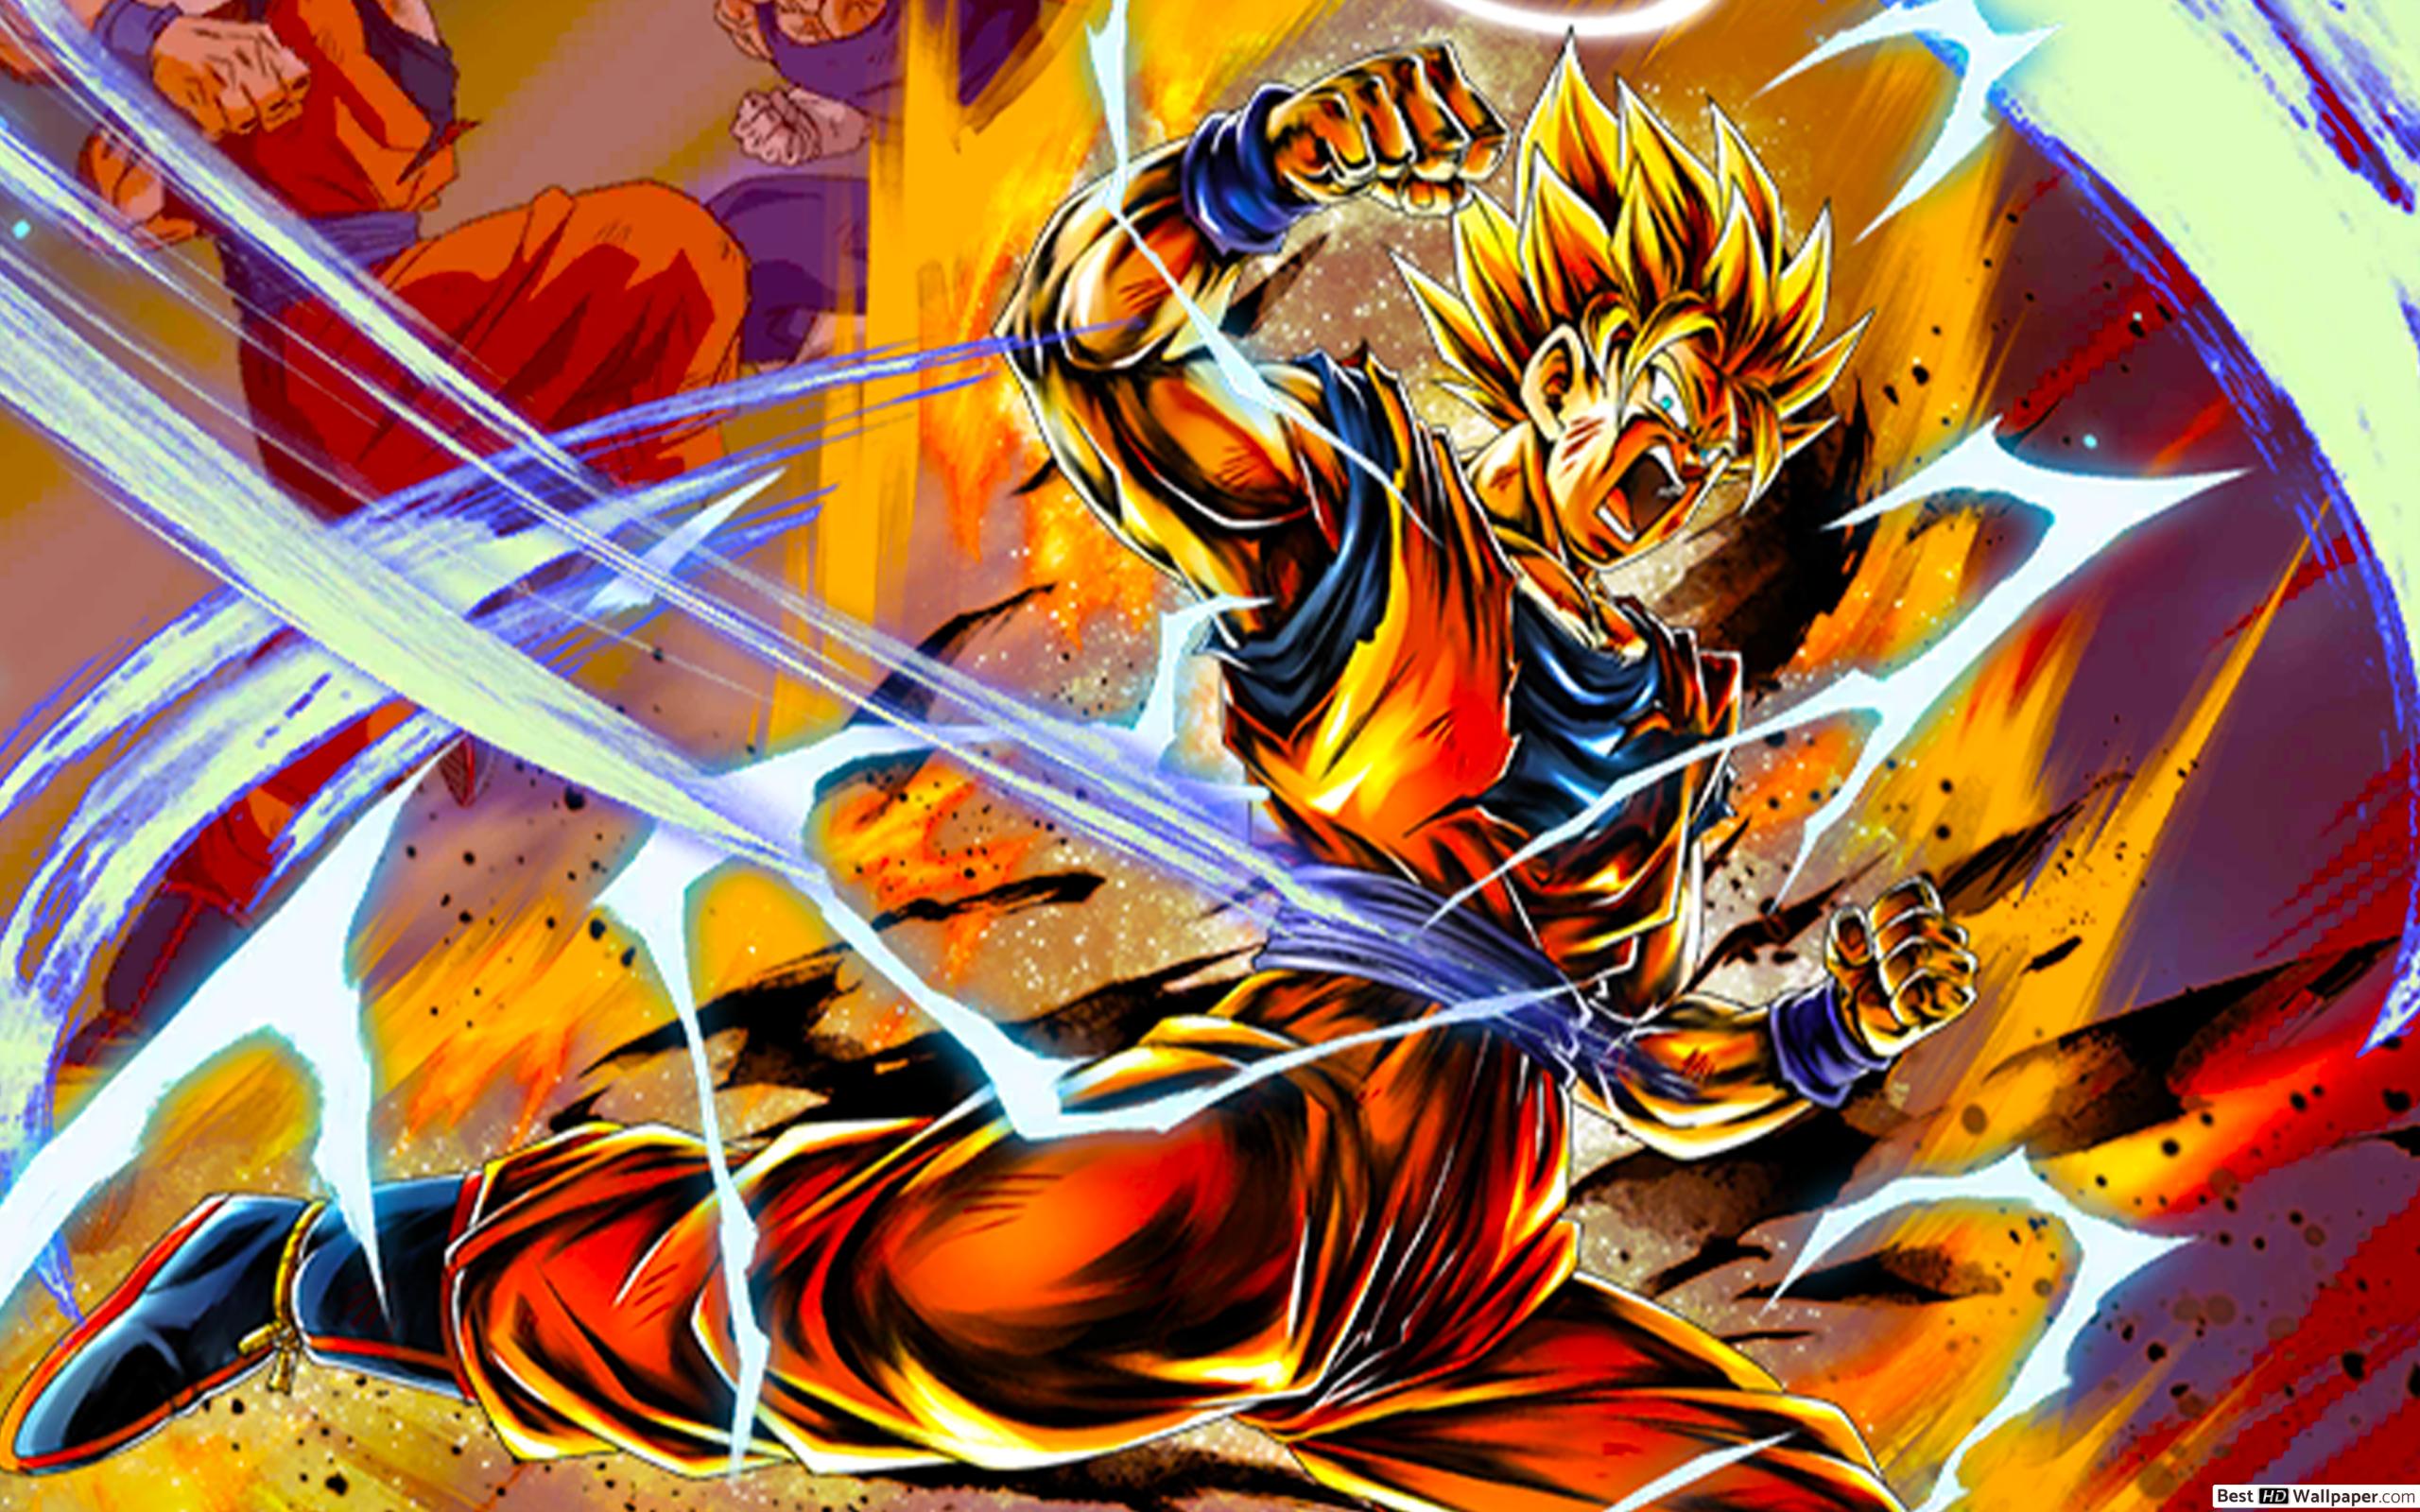 Super Saiyan 2 Goku vs. (Majin Vegeta) from Dragon Ball Z [Dragon Ball Legends Arts] for Desktop HD wallpaper download